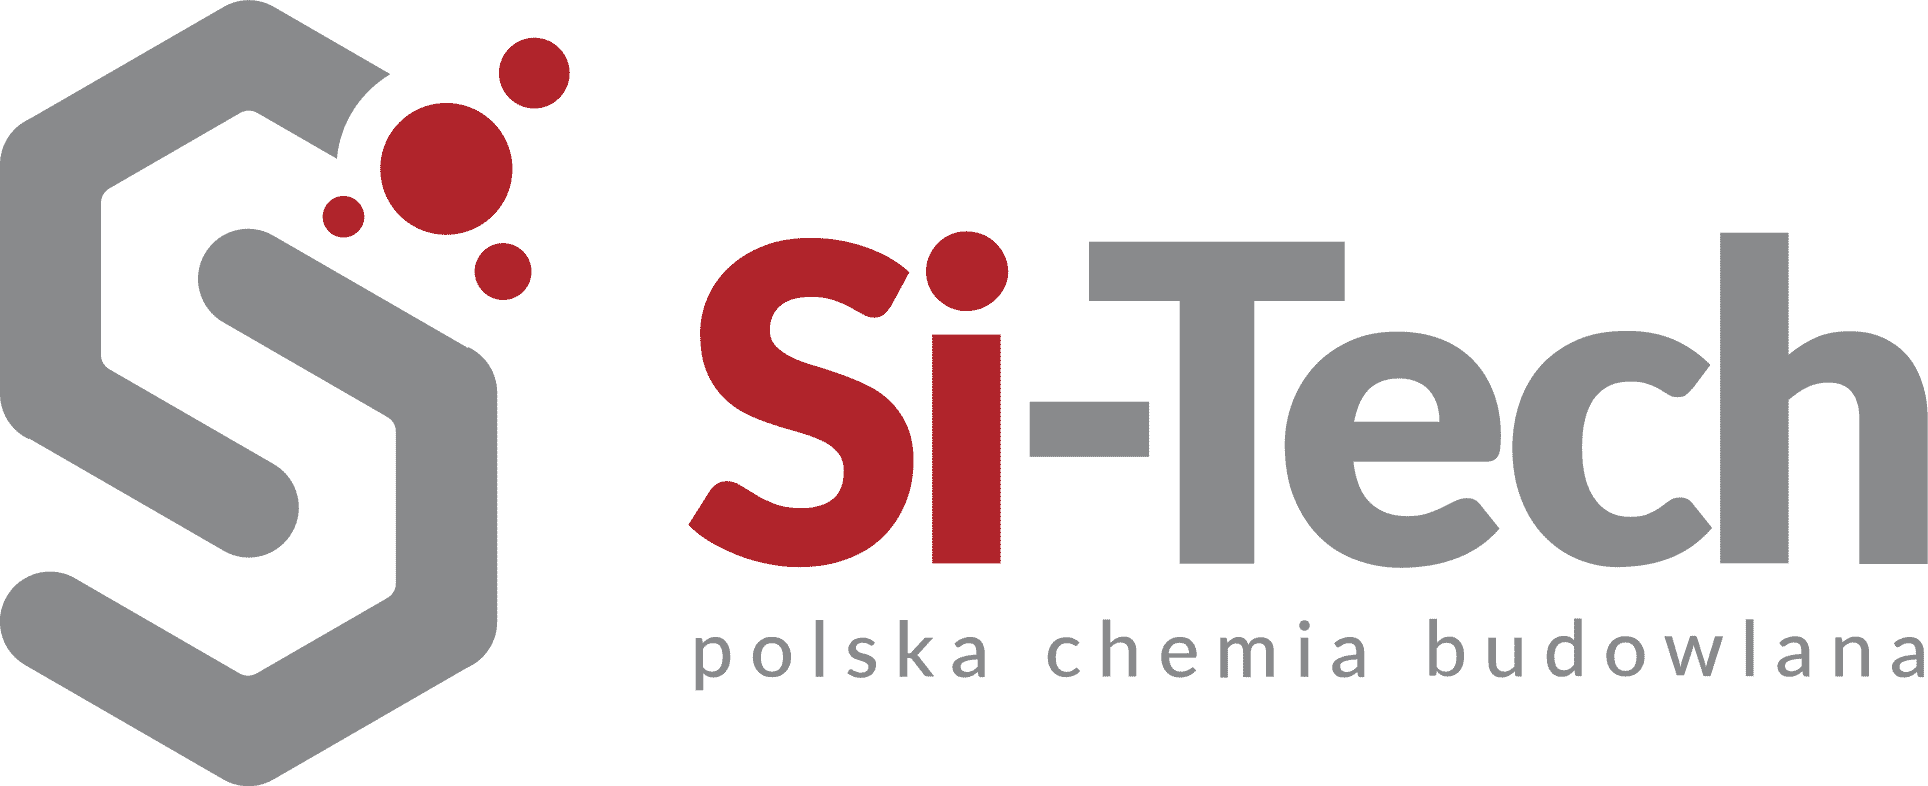 Chemia budowlana SI-TECH